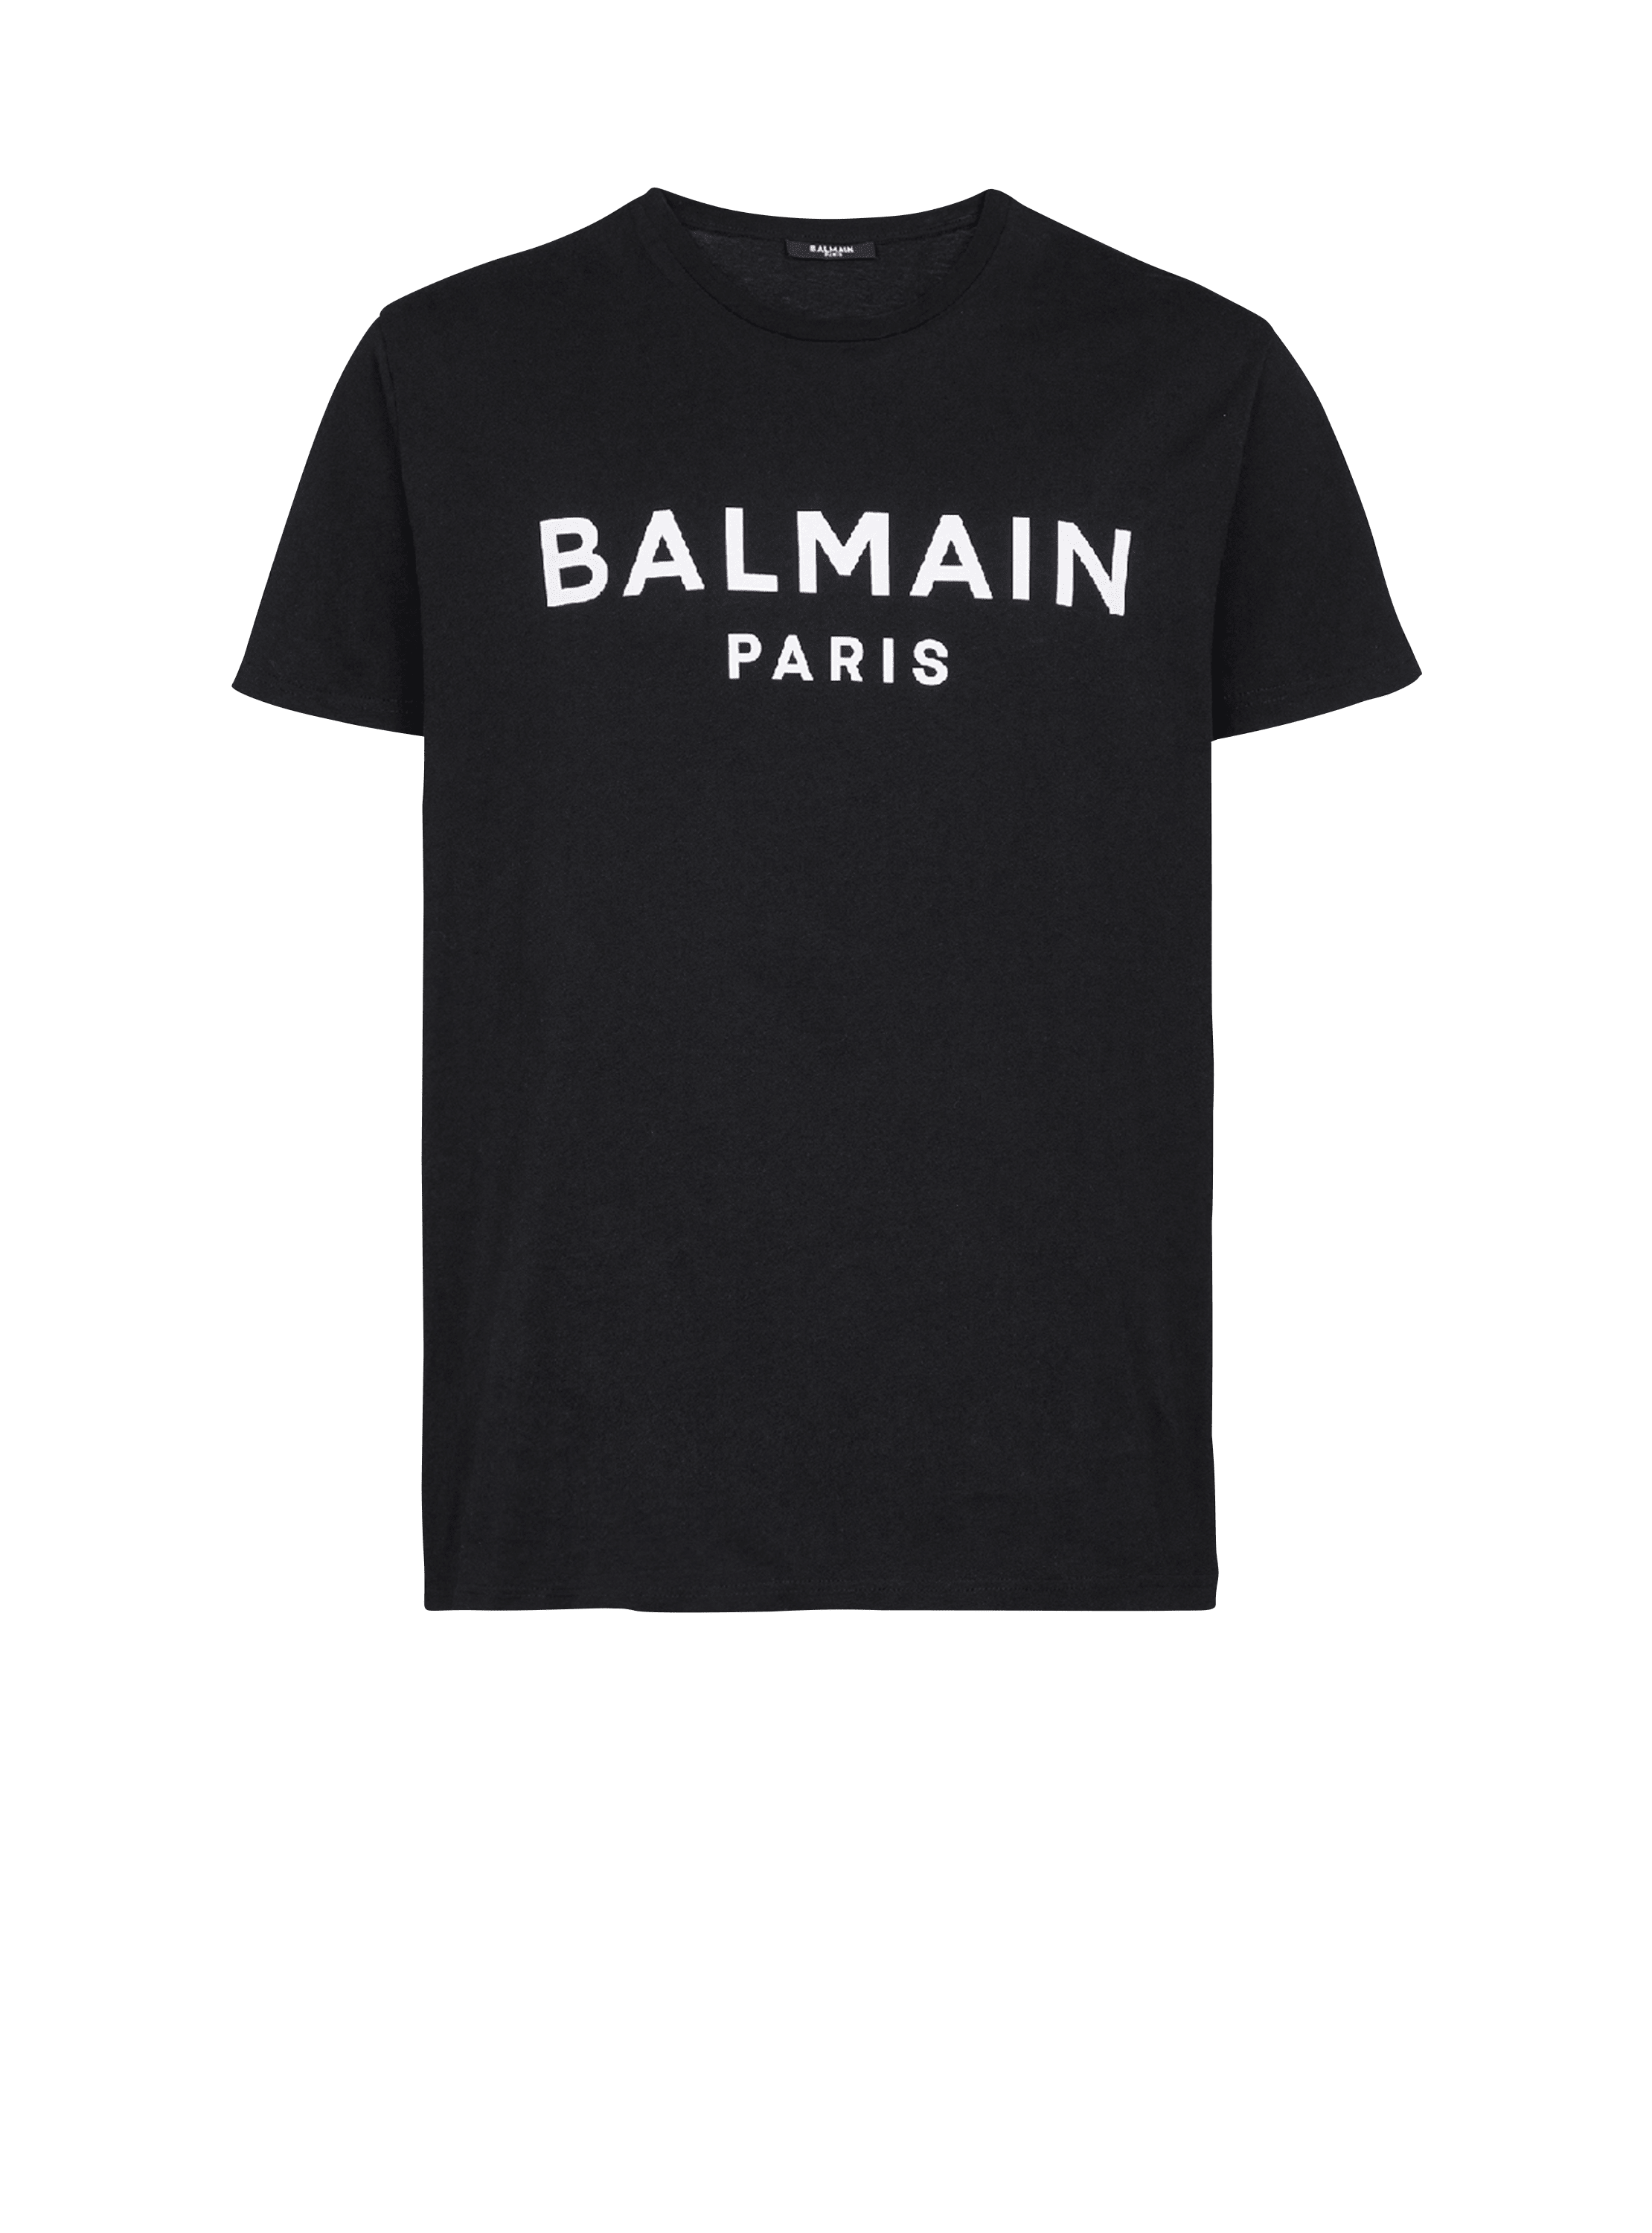 Balmain Paris 로고 프린트 디테일 코튼 티셔츠, black, hi-res